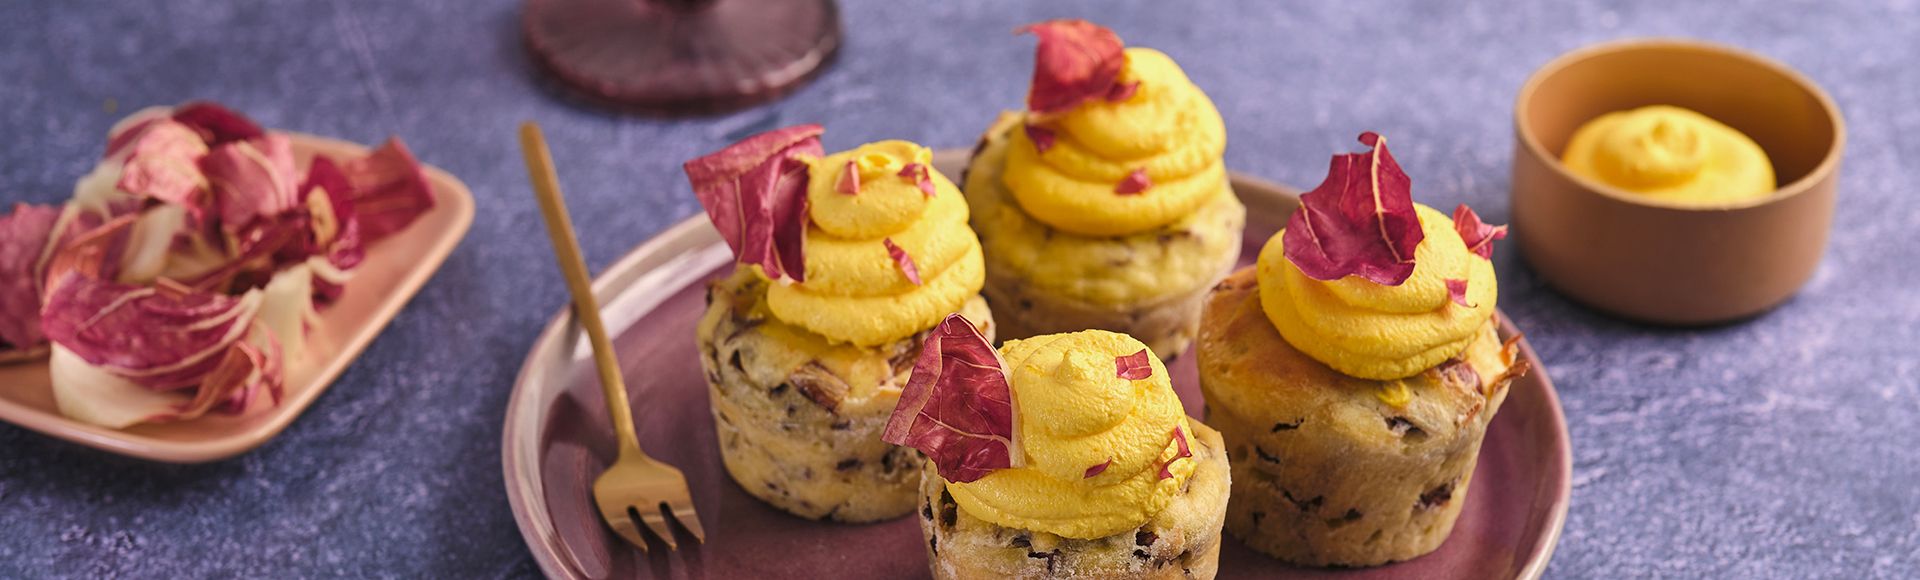 Radicchio muffin with saffron mousse